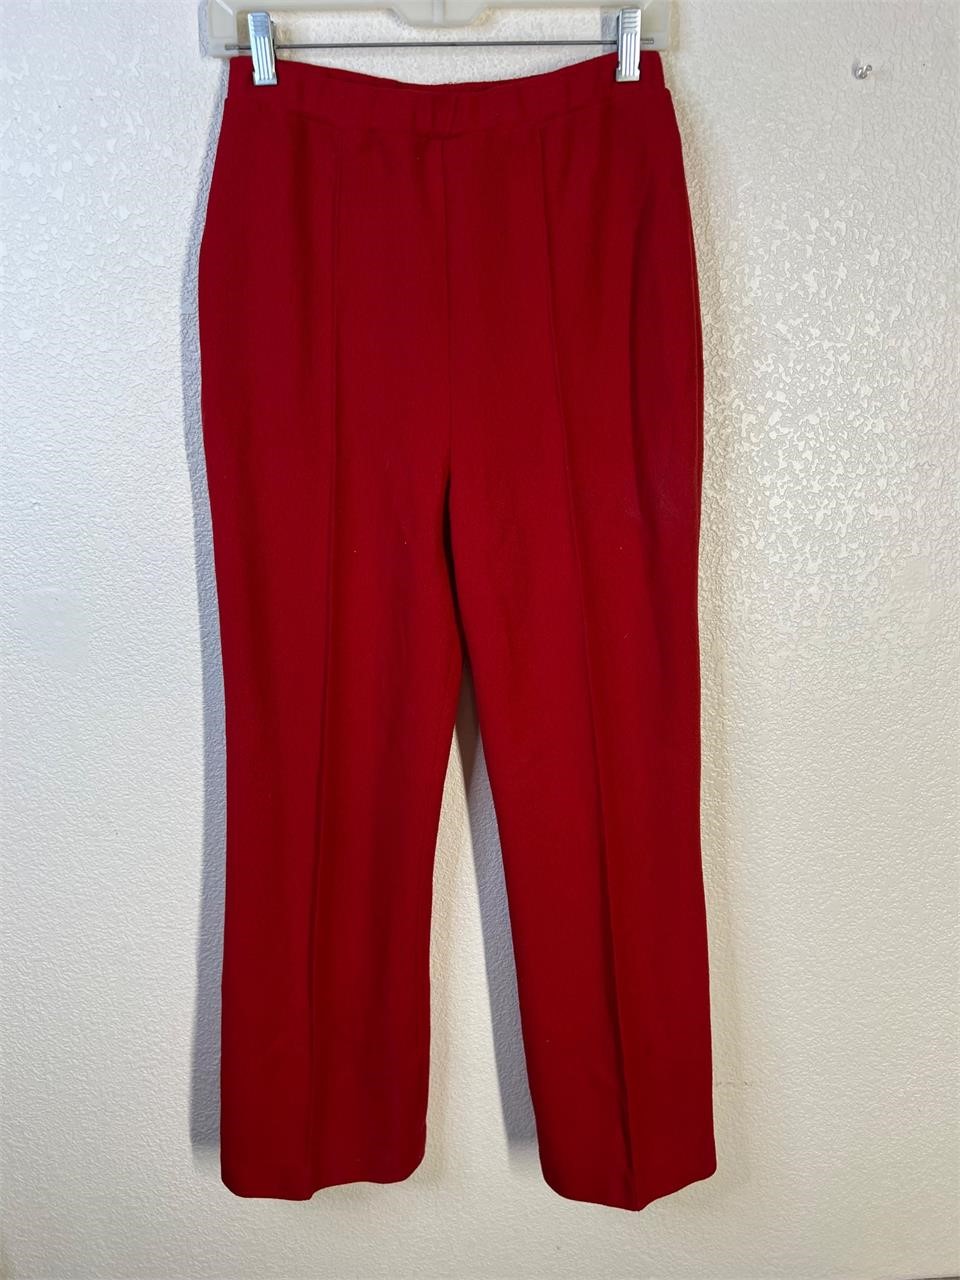 Vintage Graff Red Pants